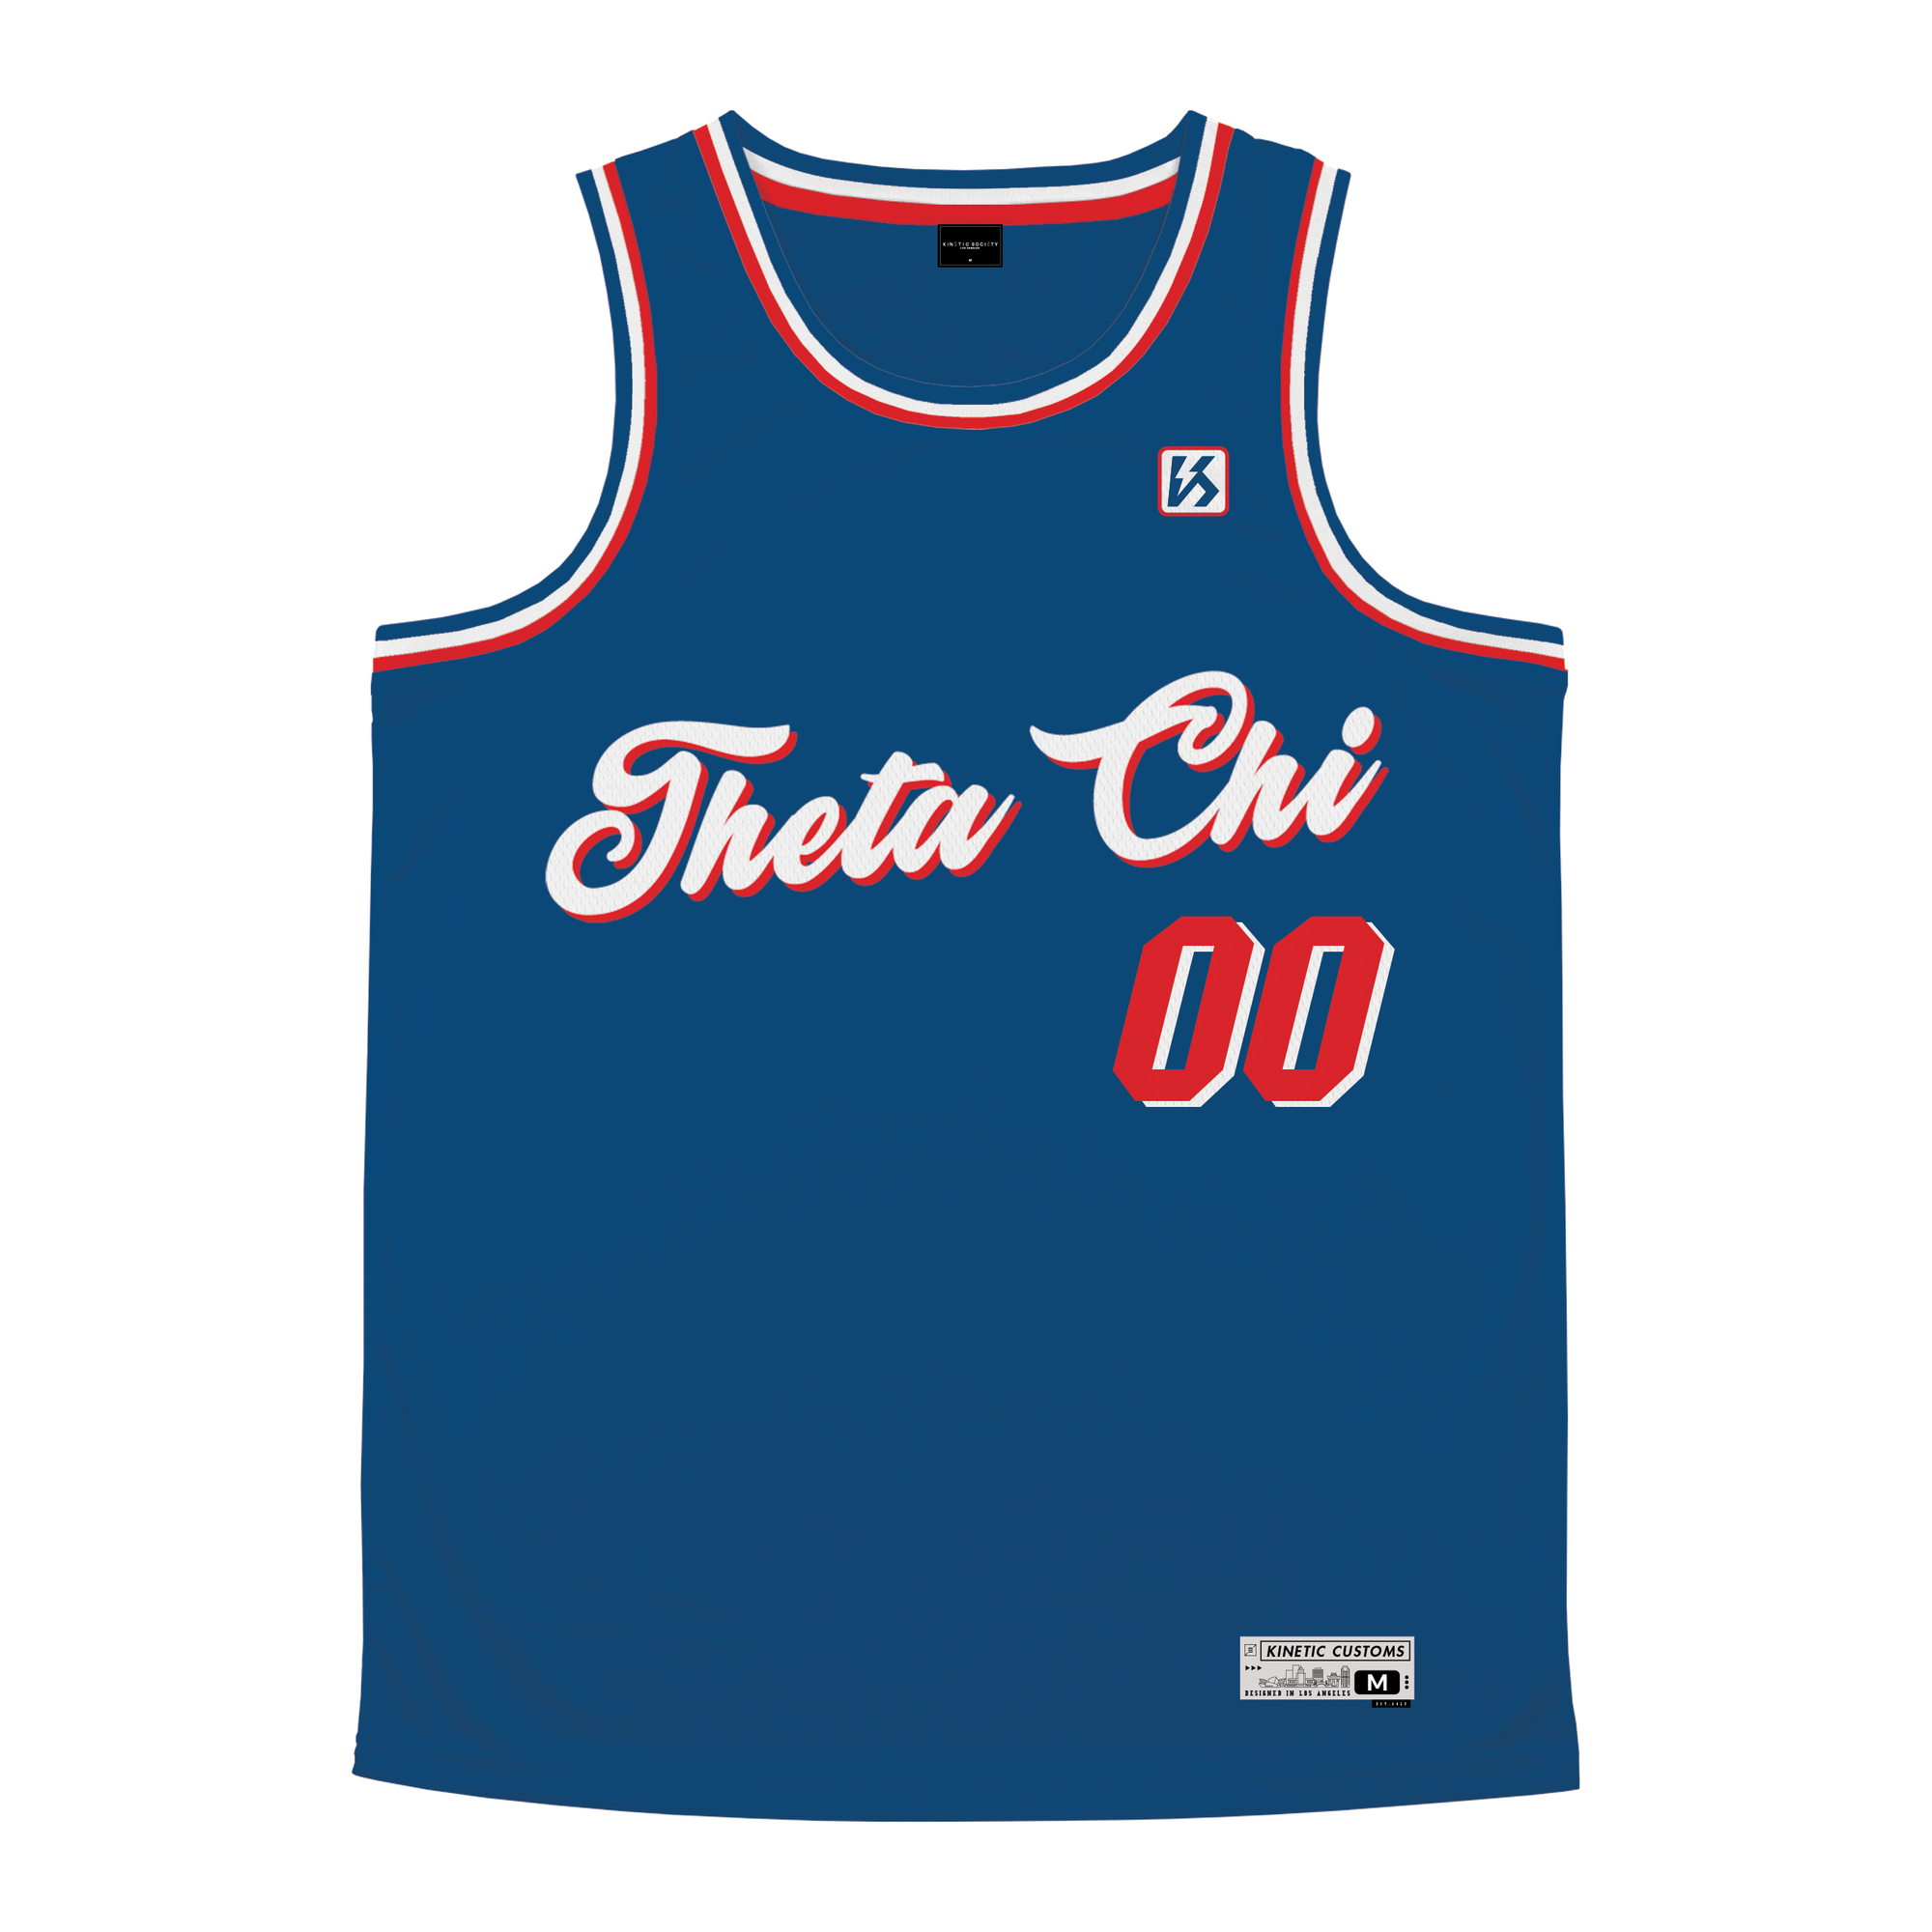 Theta Chi - The Dream Basketball Jersey